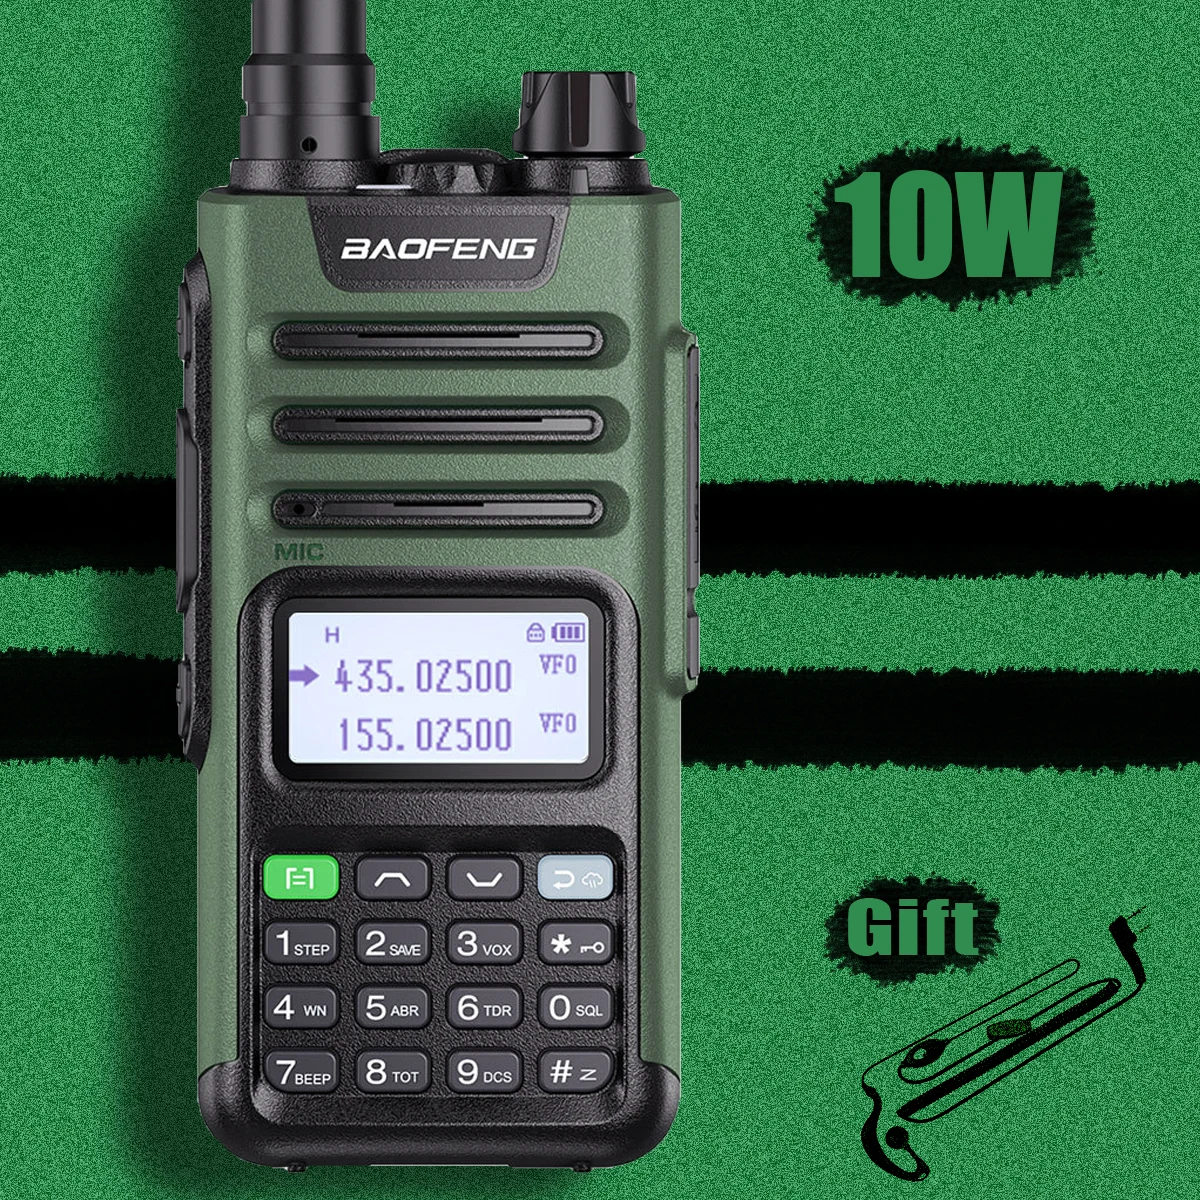 Bao feng walkie talkie long range amateur radio two way radios UV-13PRO protable radio powerful Push-button phone for hunting